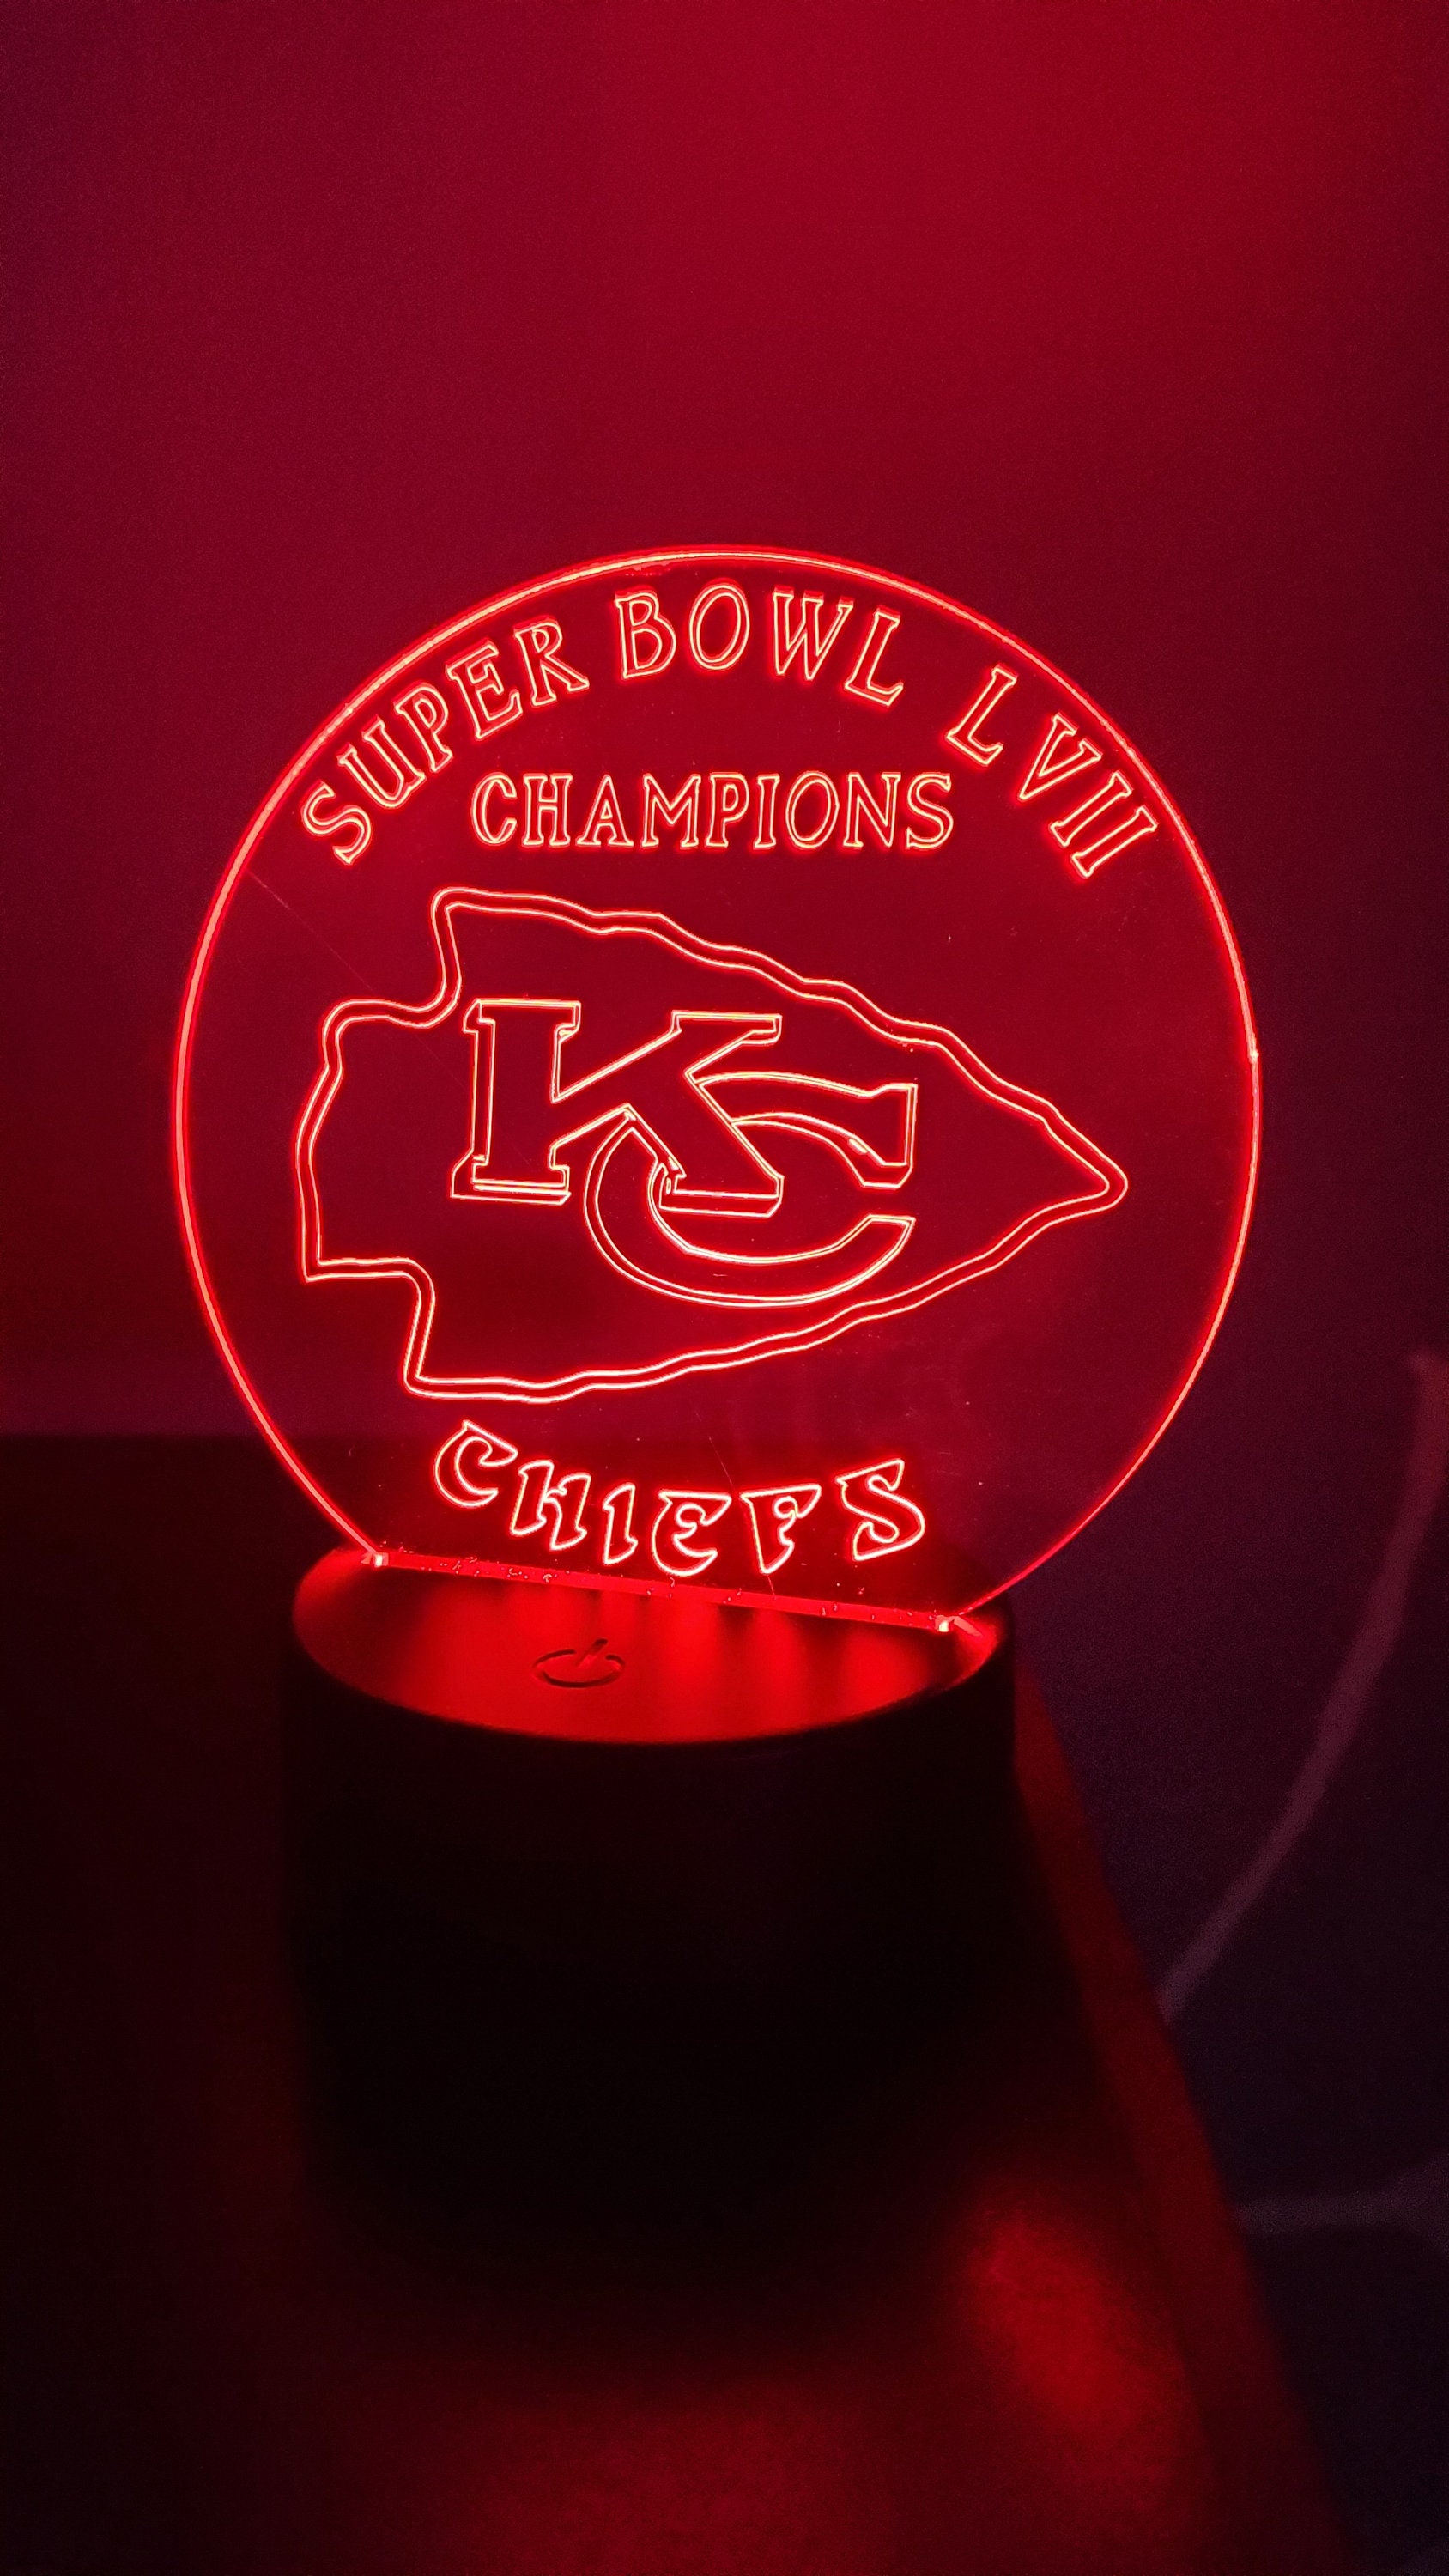 Hallmark NFL Kansas City Chiefs Super Bowl LVII Commemorative Ornament New Box